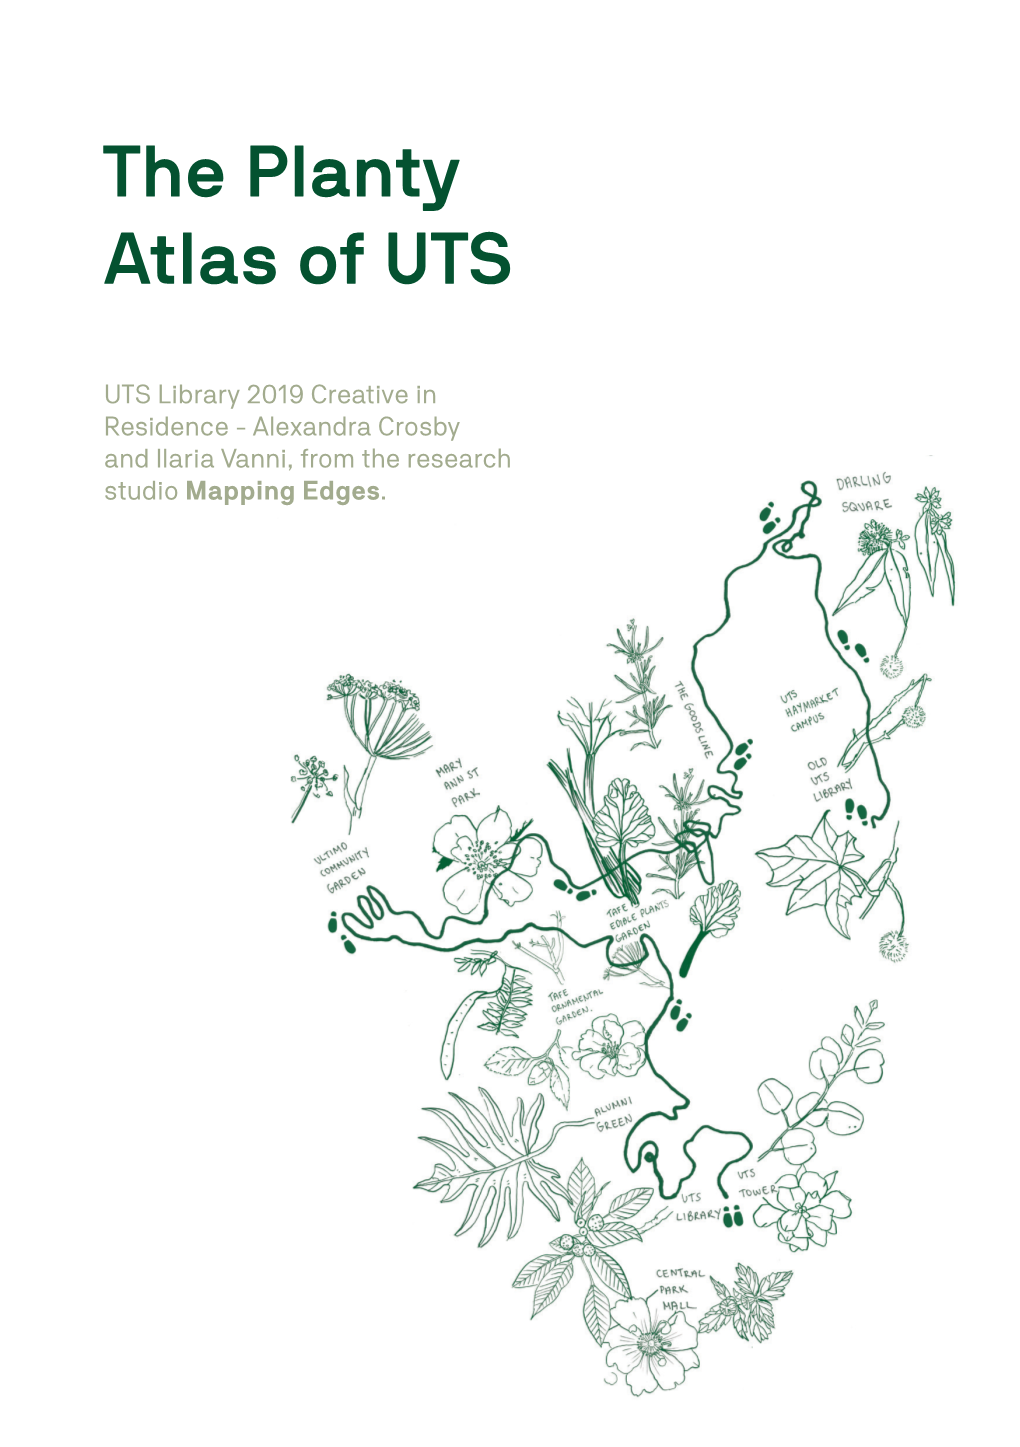 The Planty Atlas of UTS